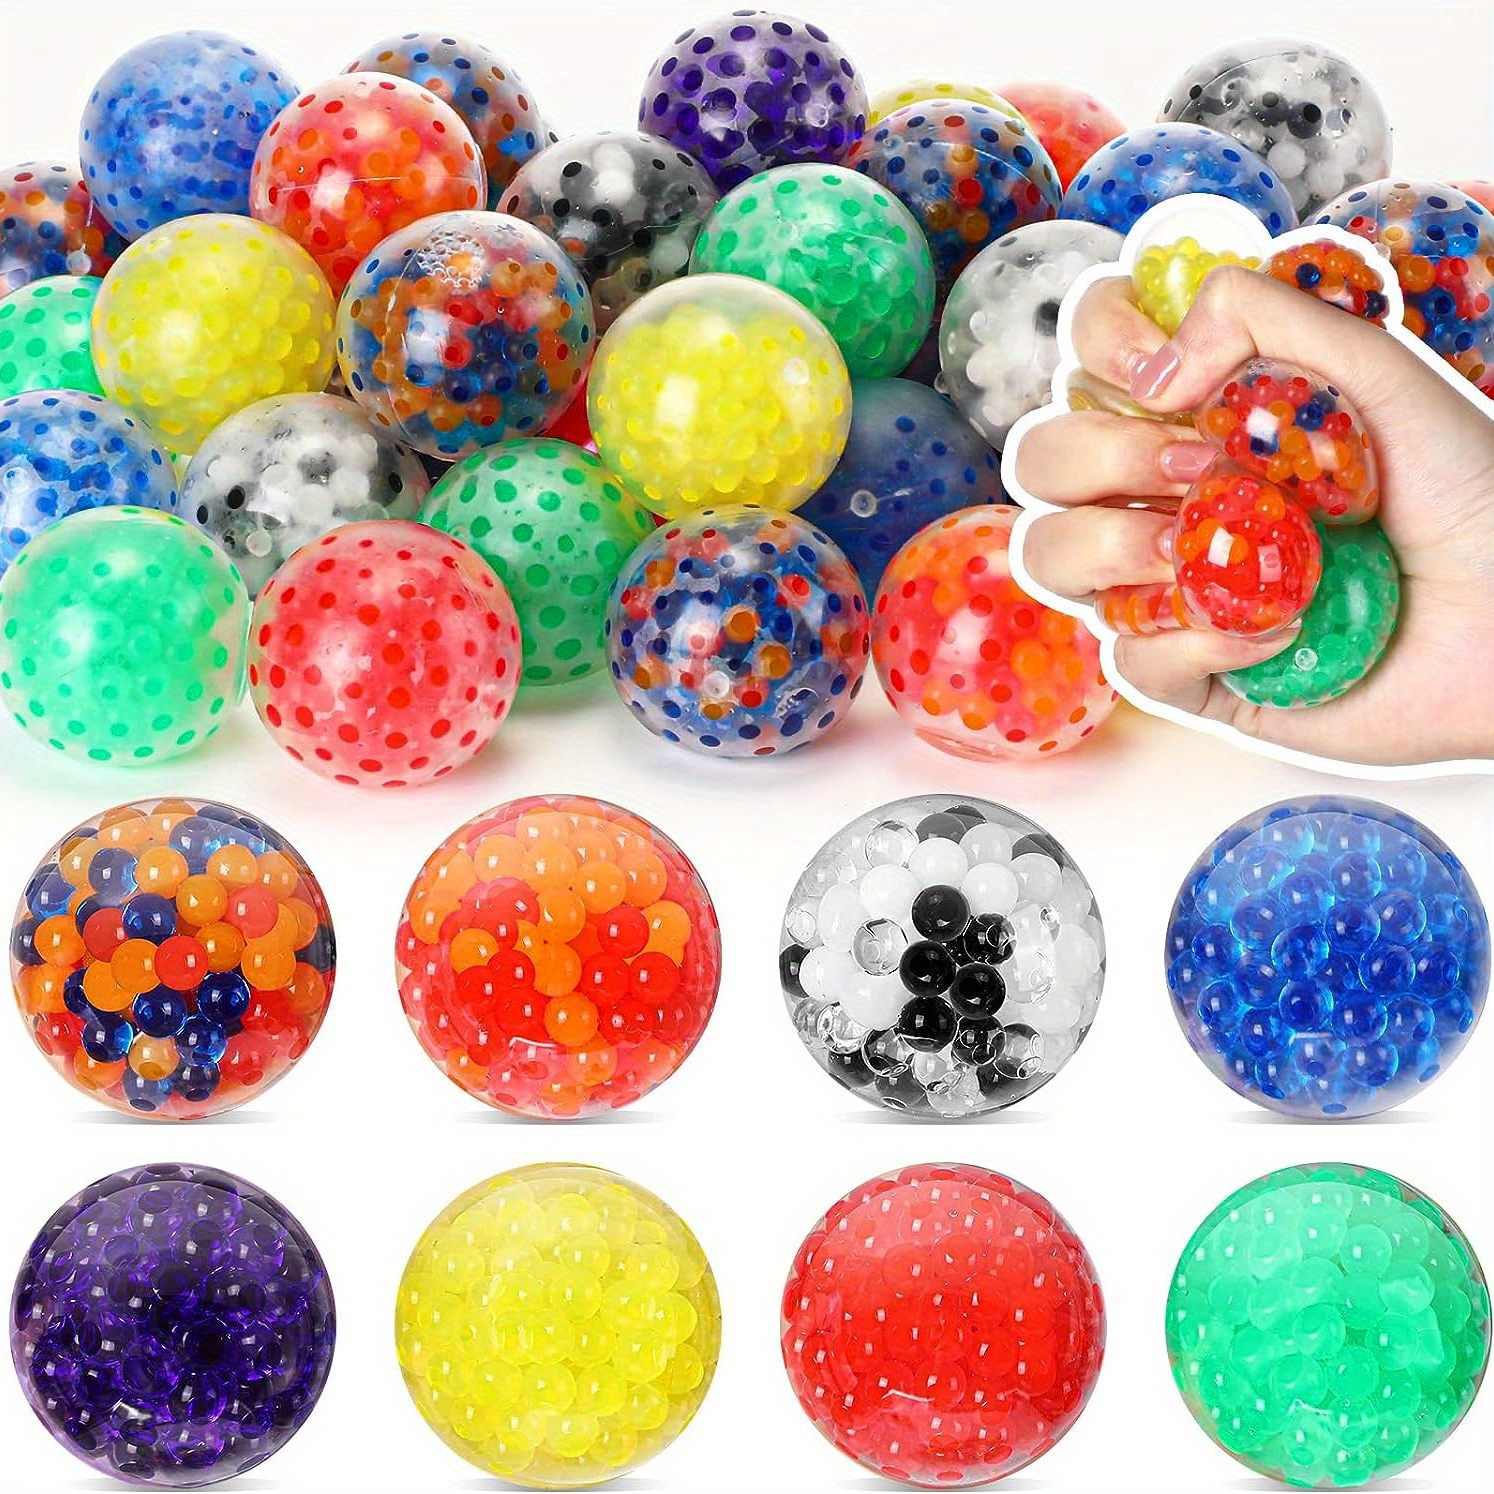  Mini bolas de estrés para pollitos para niños (paquete de 3)  juguetes sensoriales de bolas antiestrés esponjosas, juguetes sensoriales  de Pascua para pollitos de Pascua, regalos de fiesta, juguetes : Juguetes